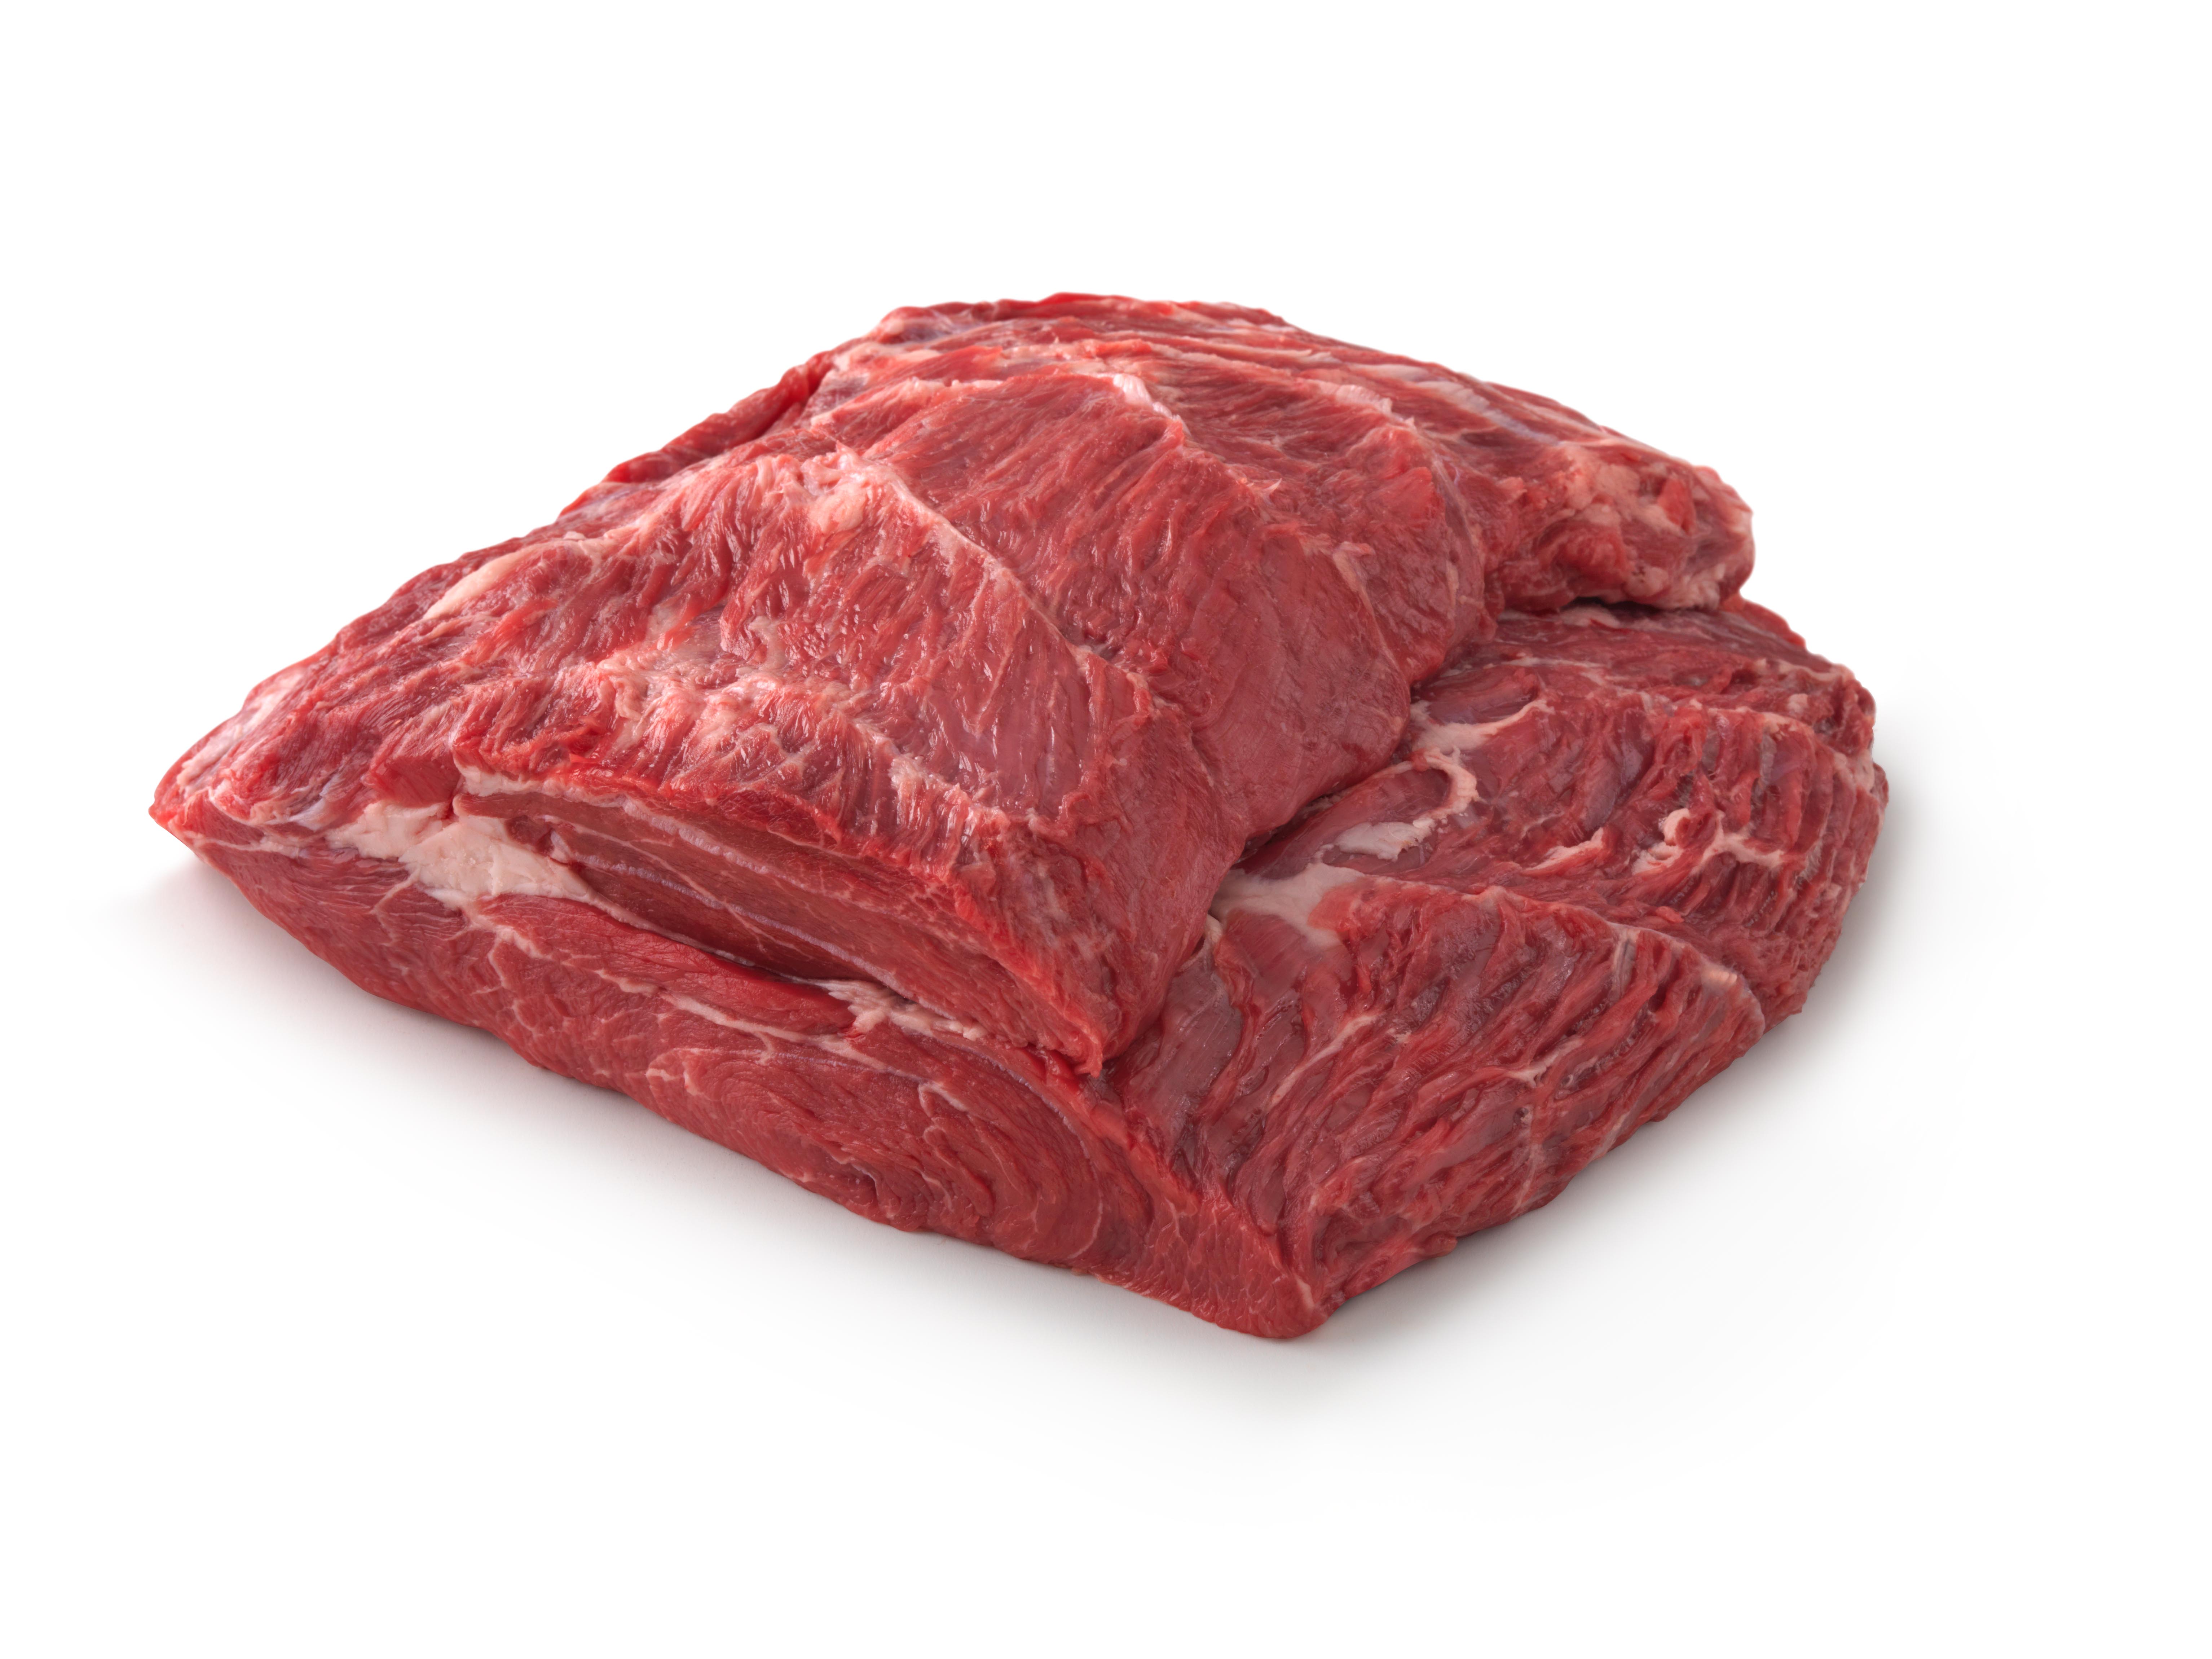 Beef Chuck Cuts Chuck Steak Chuck Roast Denver Steak Short Ribs And More All Qd Up,Ant Control Service Cost